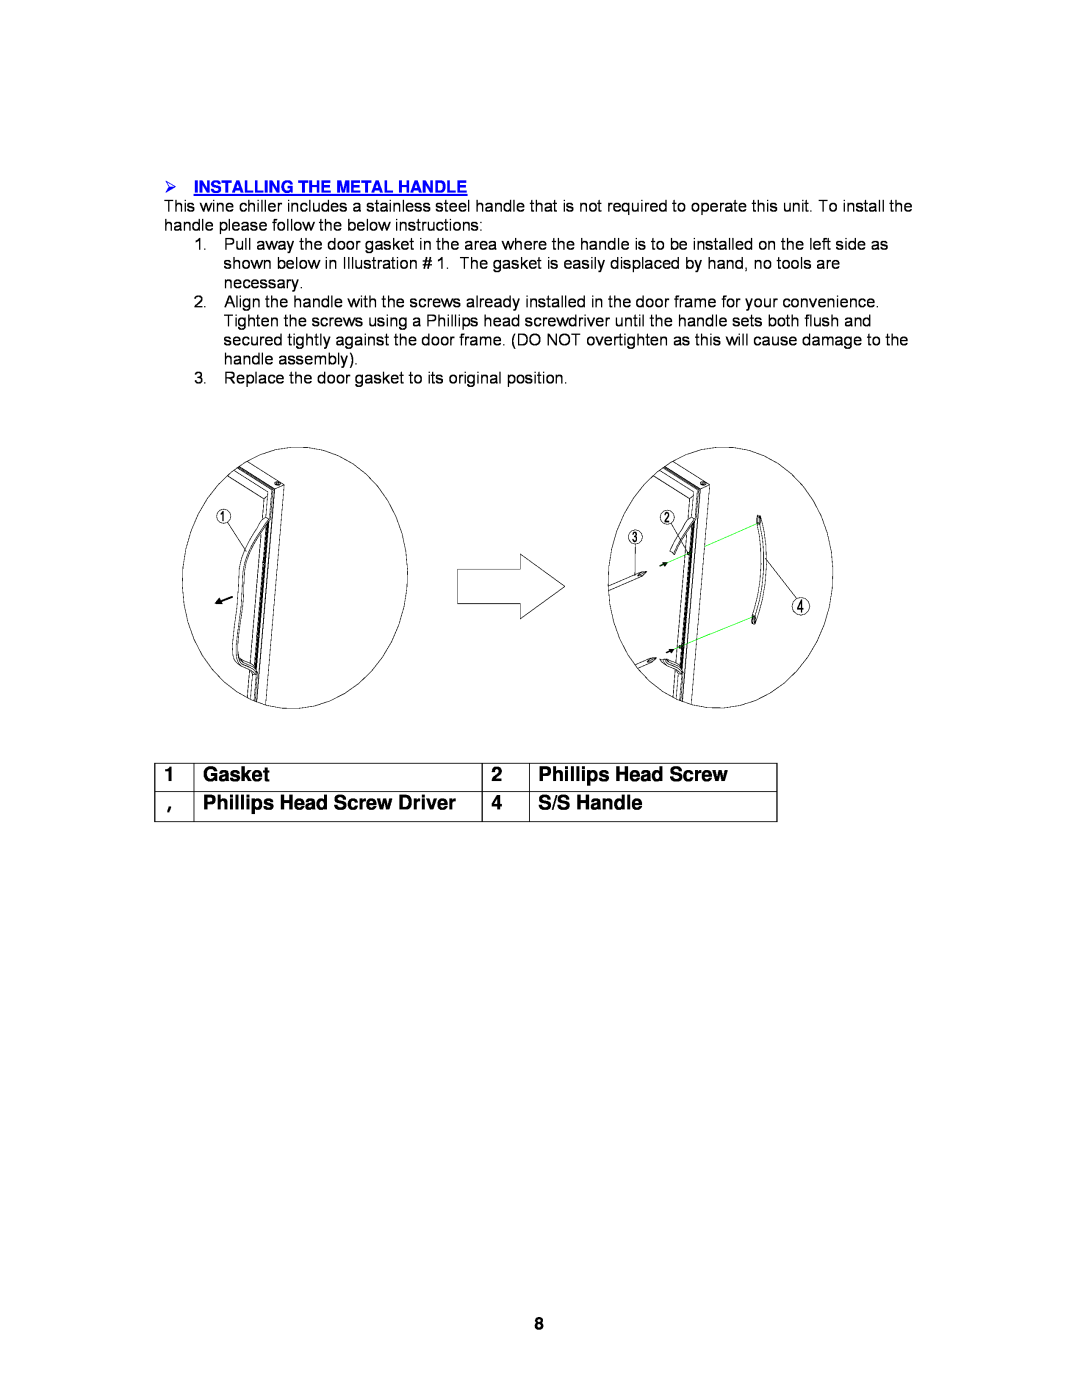 Avanti EWC1801DZ instruction manual Gasket, Phillips Head Screw Driver, S/S Handle,  Installing The Metal Handle 